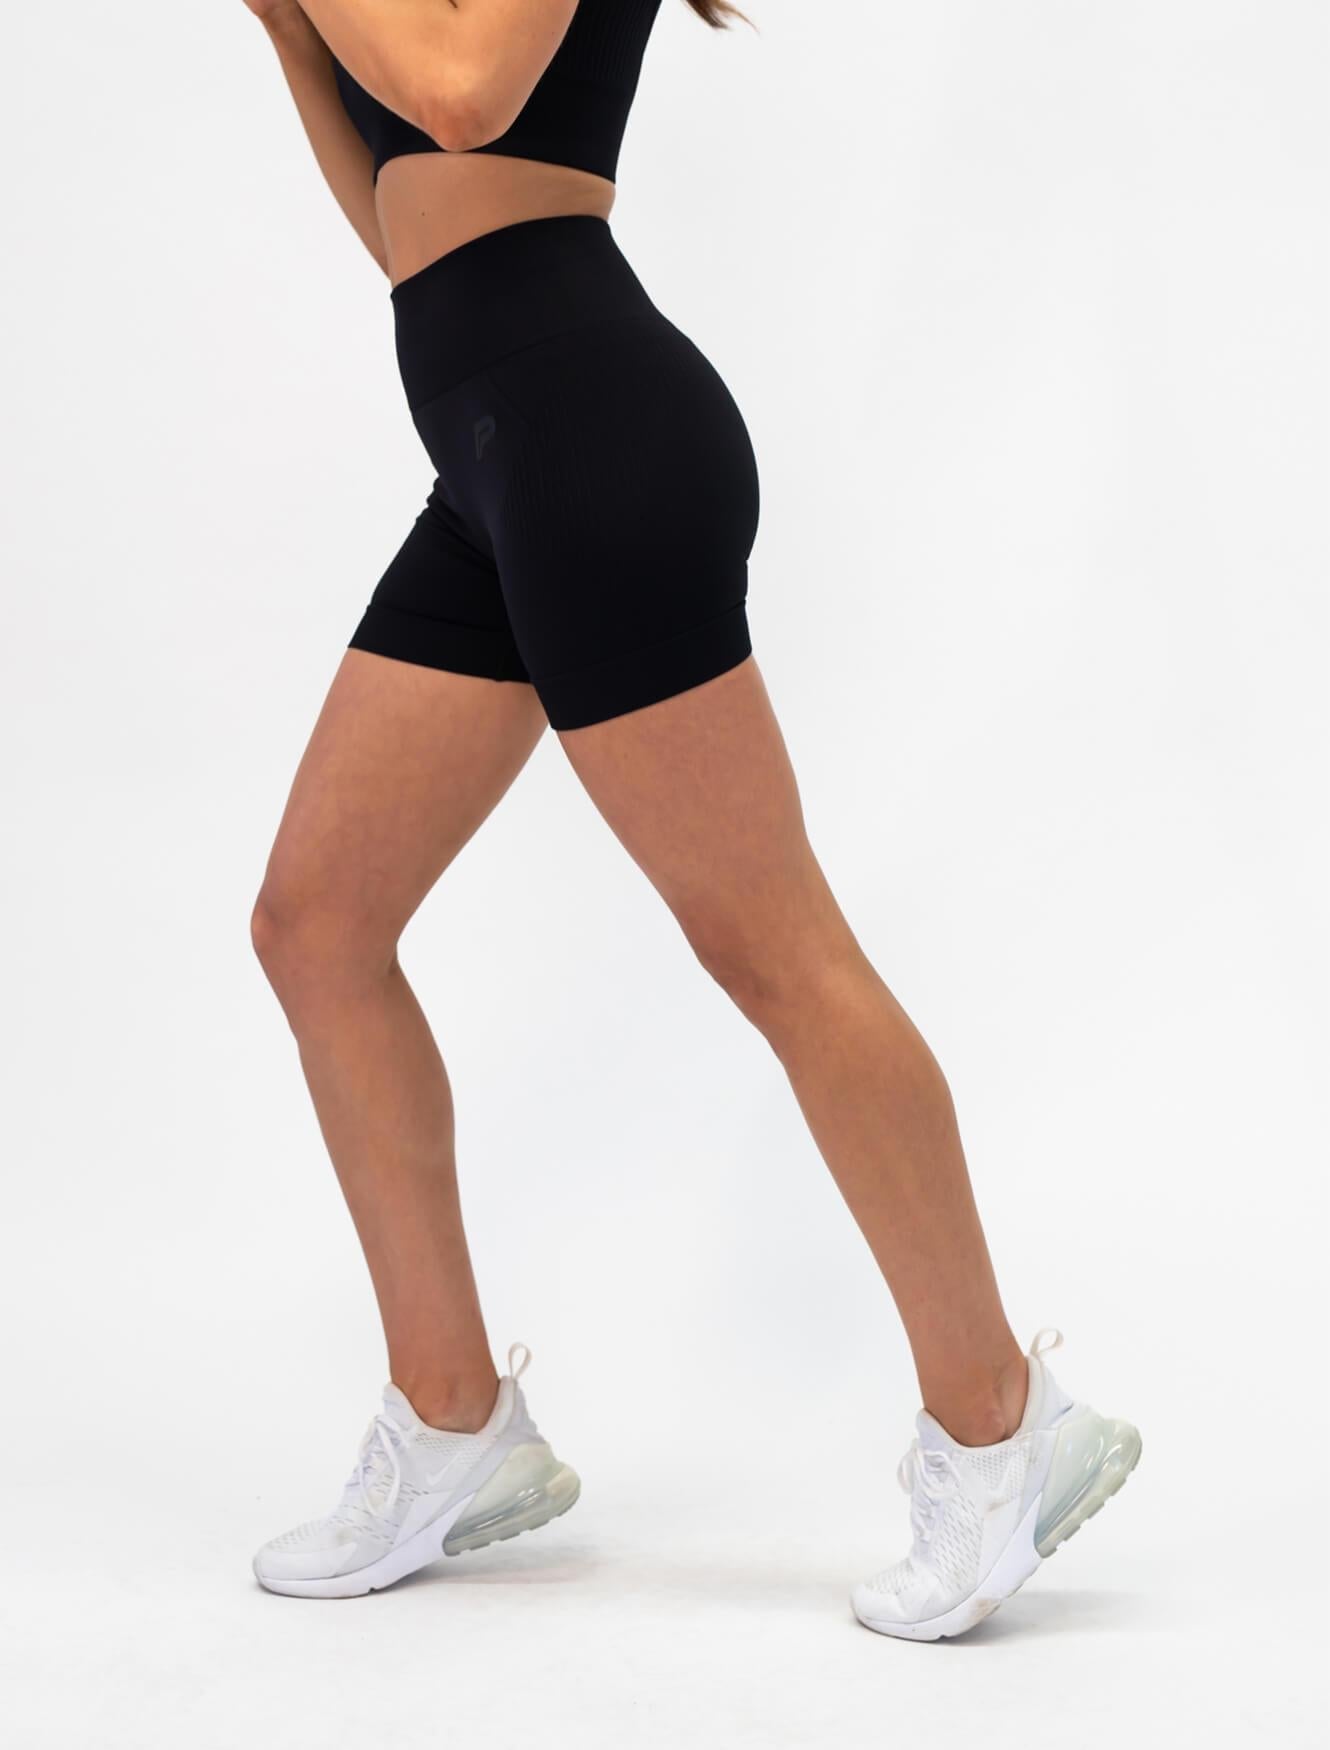 ADAPT Seamless Short Length Shorts / Blackout Pursue Fitness 3